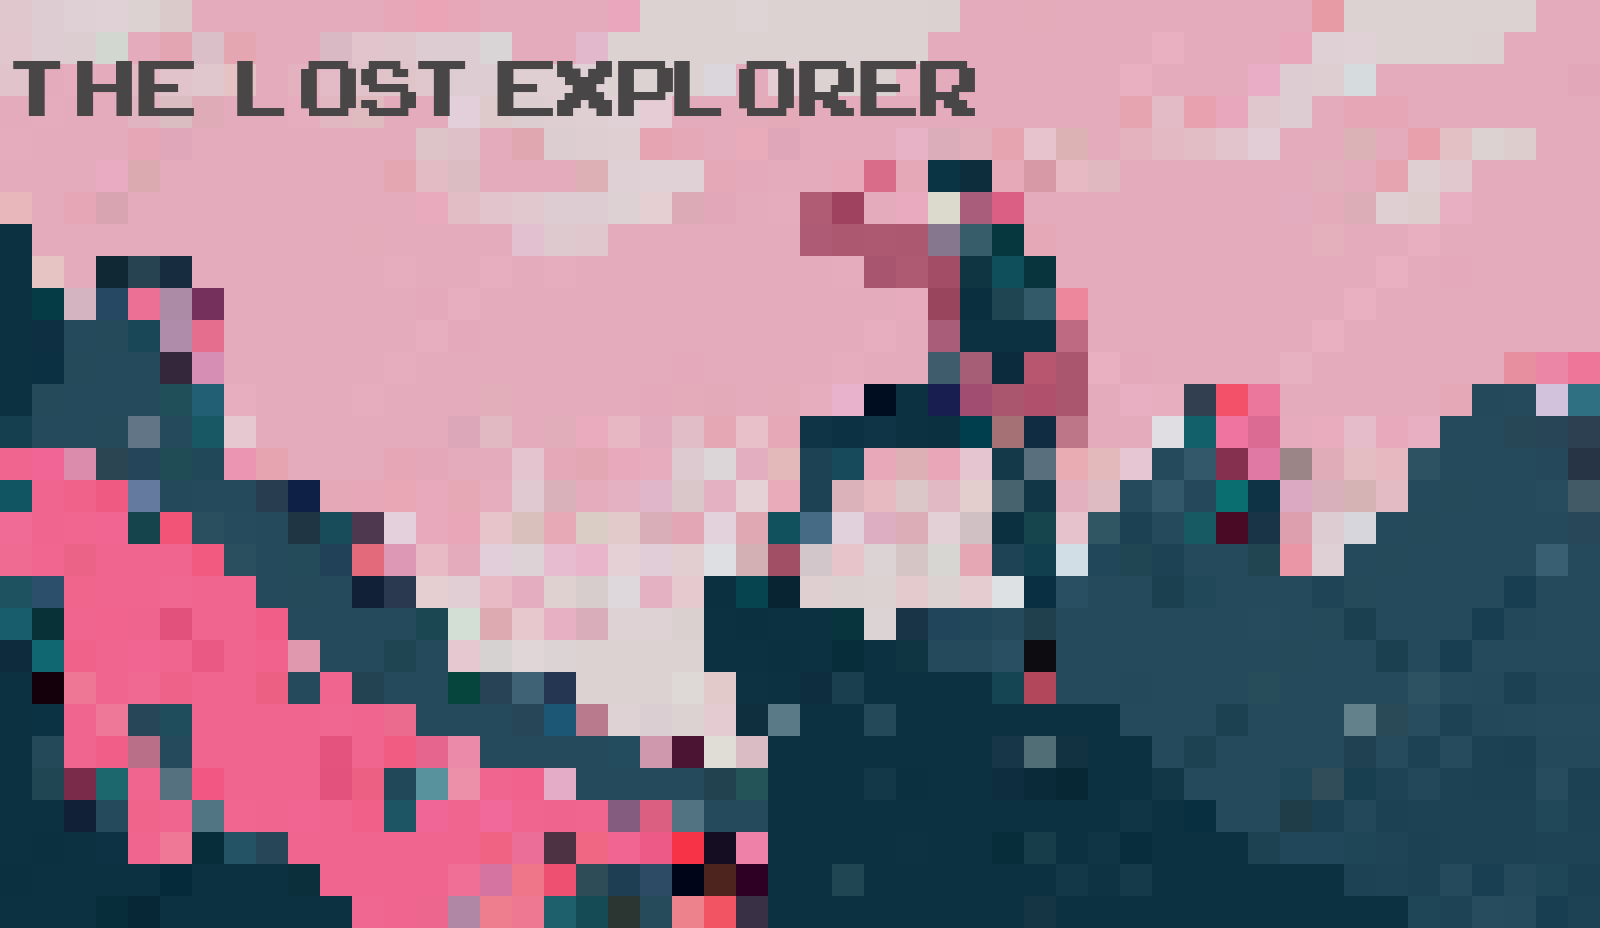 The lost explorer